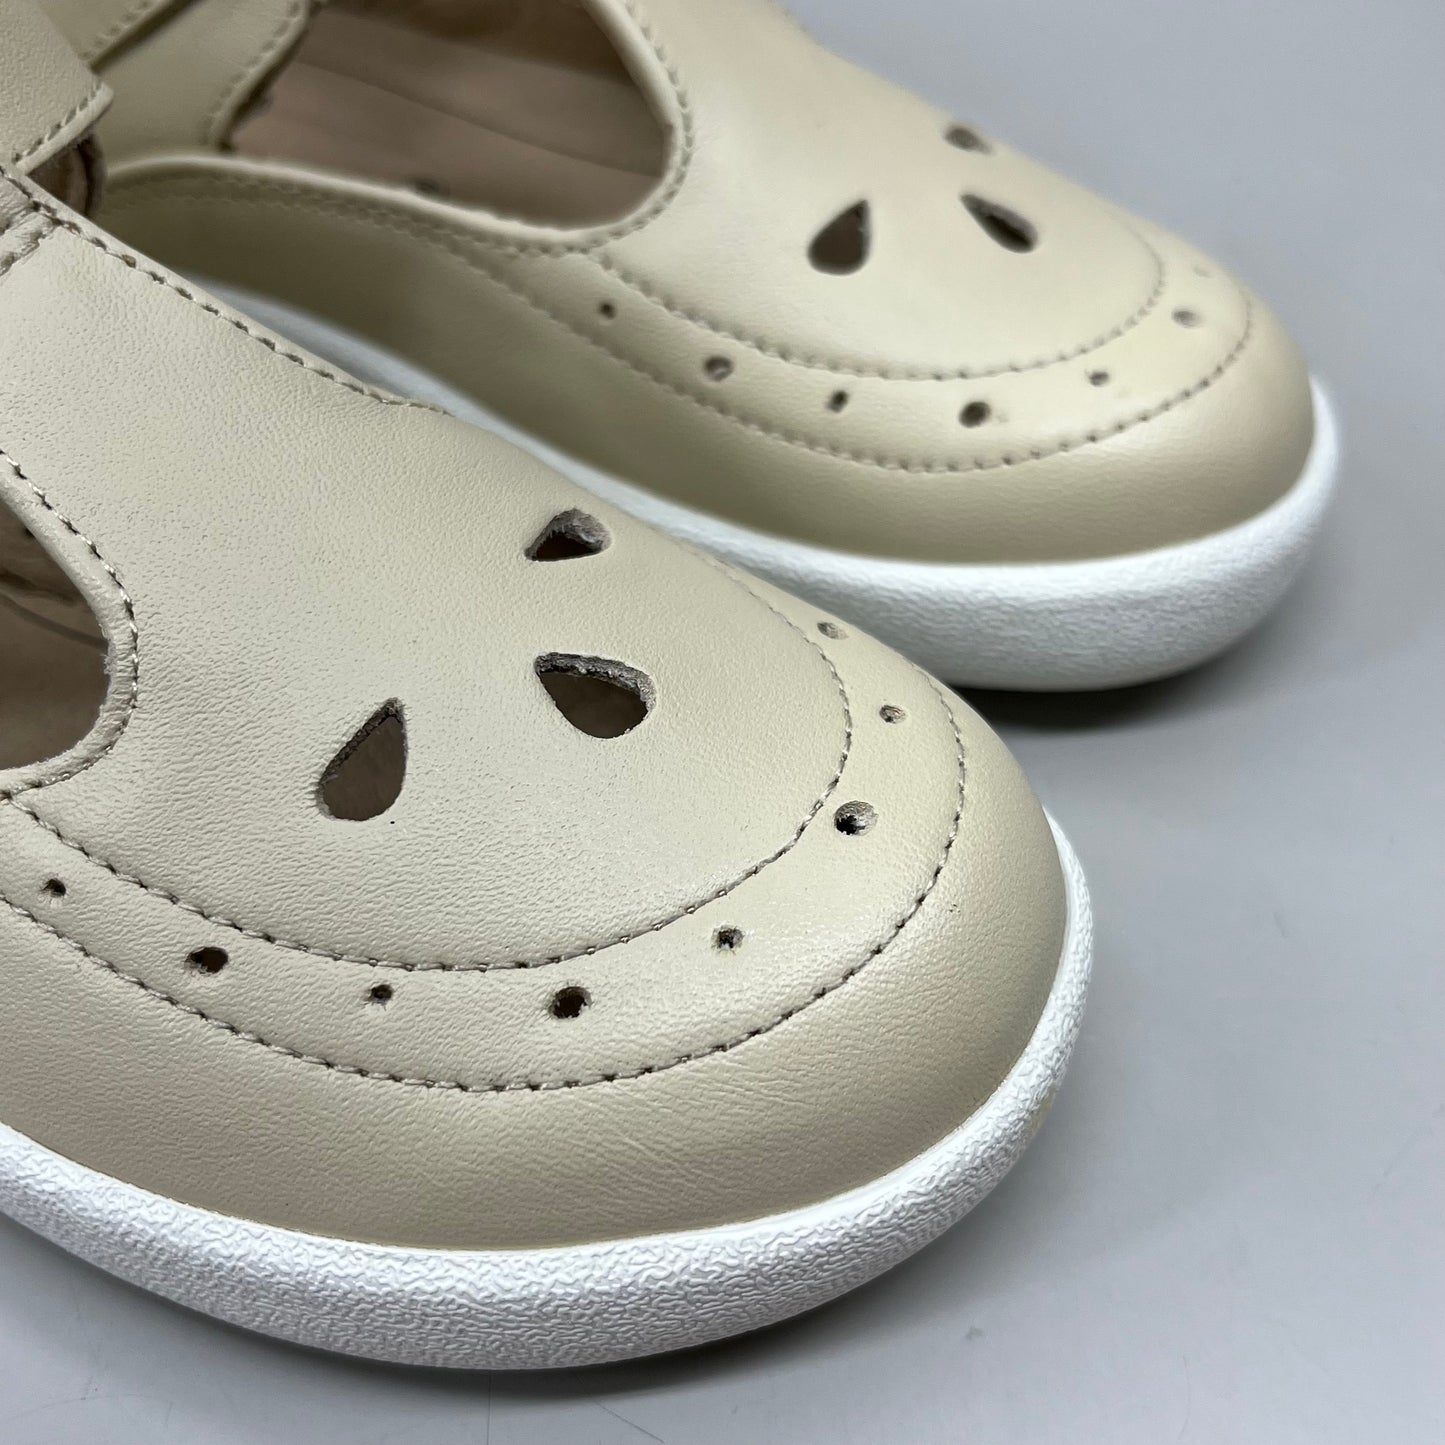 OLD SOLES Royal Adjustable T Strap Leather Shoe Kid's Sz 30 US 13 Cream #5011